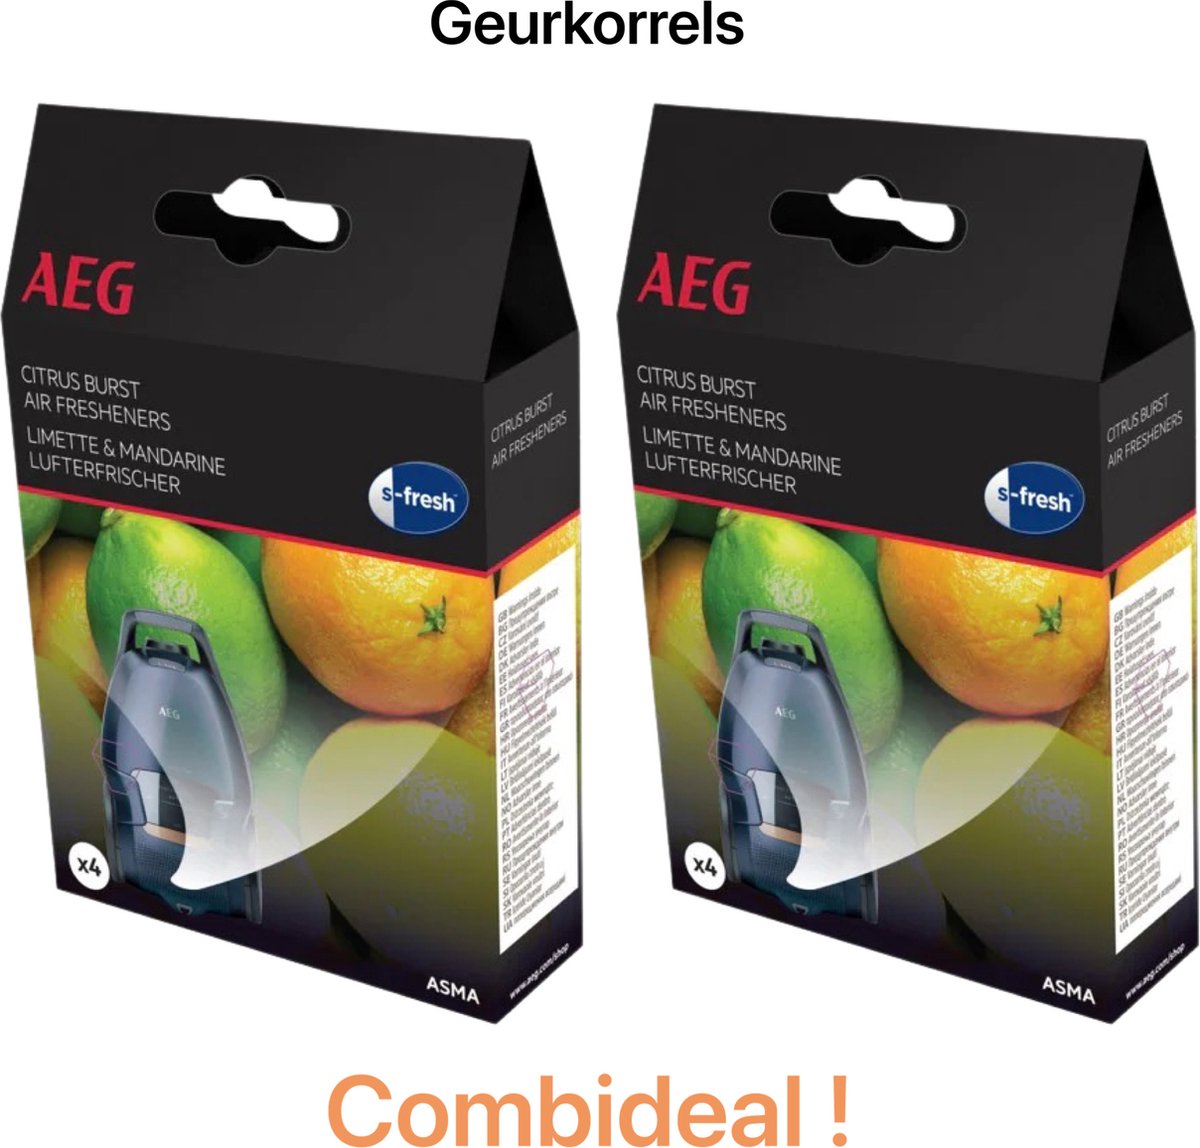 AEG - S-Fresh - Geurkorrels - Citrus Burst (citroen/limoen-geur) - Air Freshners - Geurparels - COMBIDEAL - 8 Zakjes